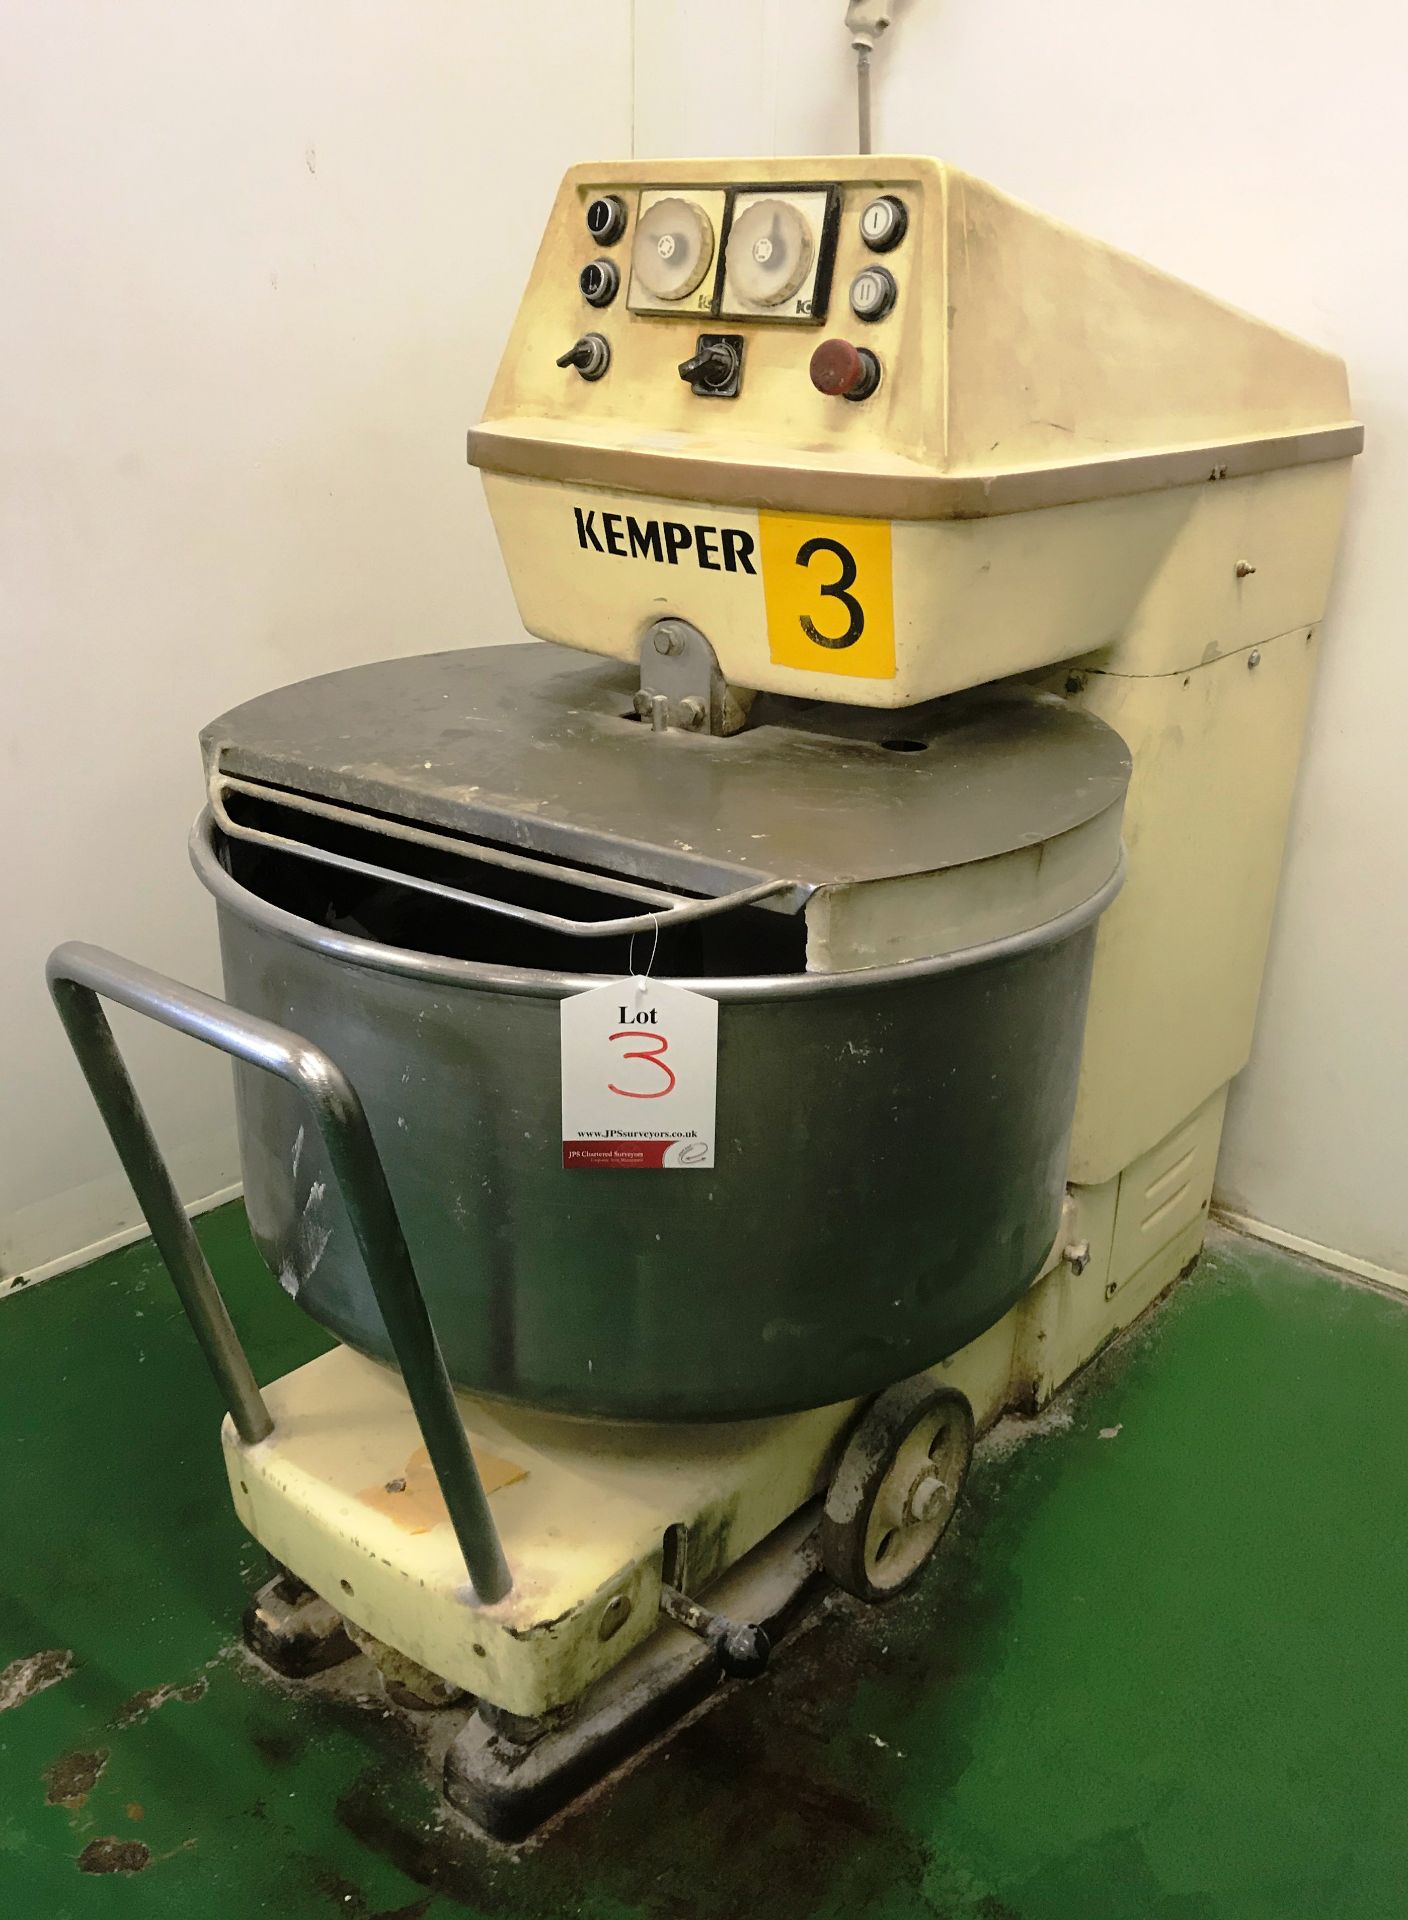 Kemper 3 Spiral Mixer w/ Removable Bowl | Advised 64kg & YOM: 2003 - Image 2 of 3